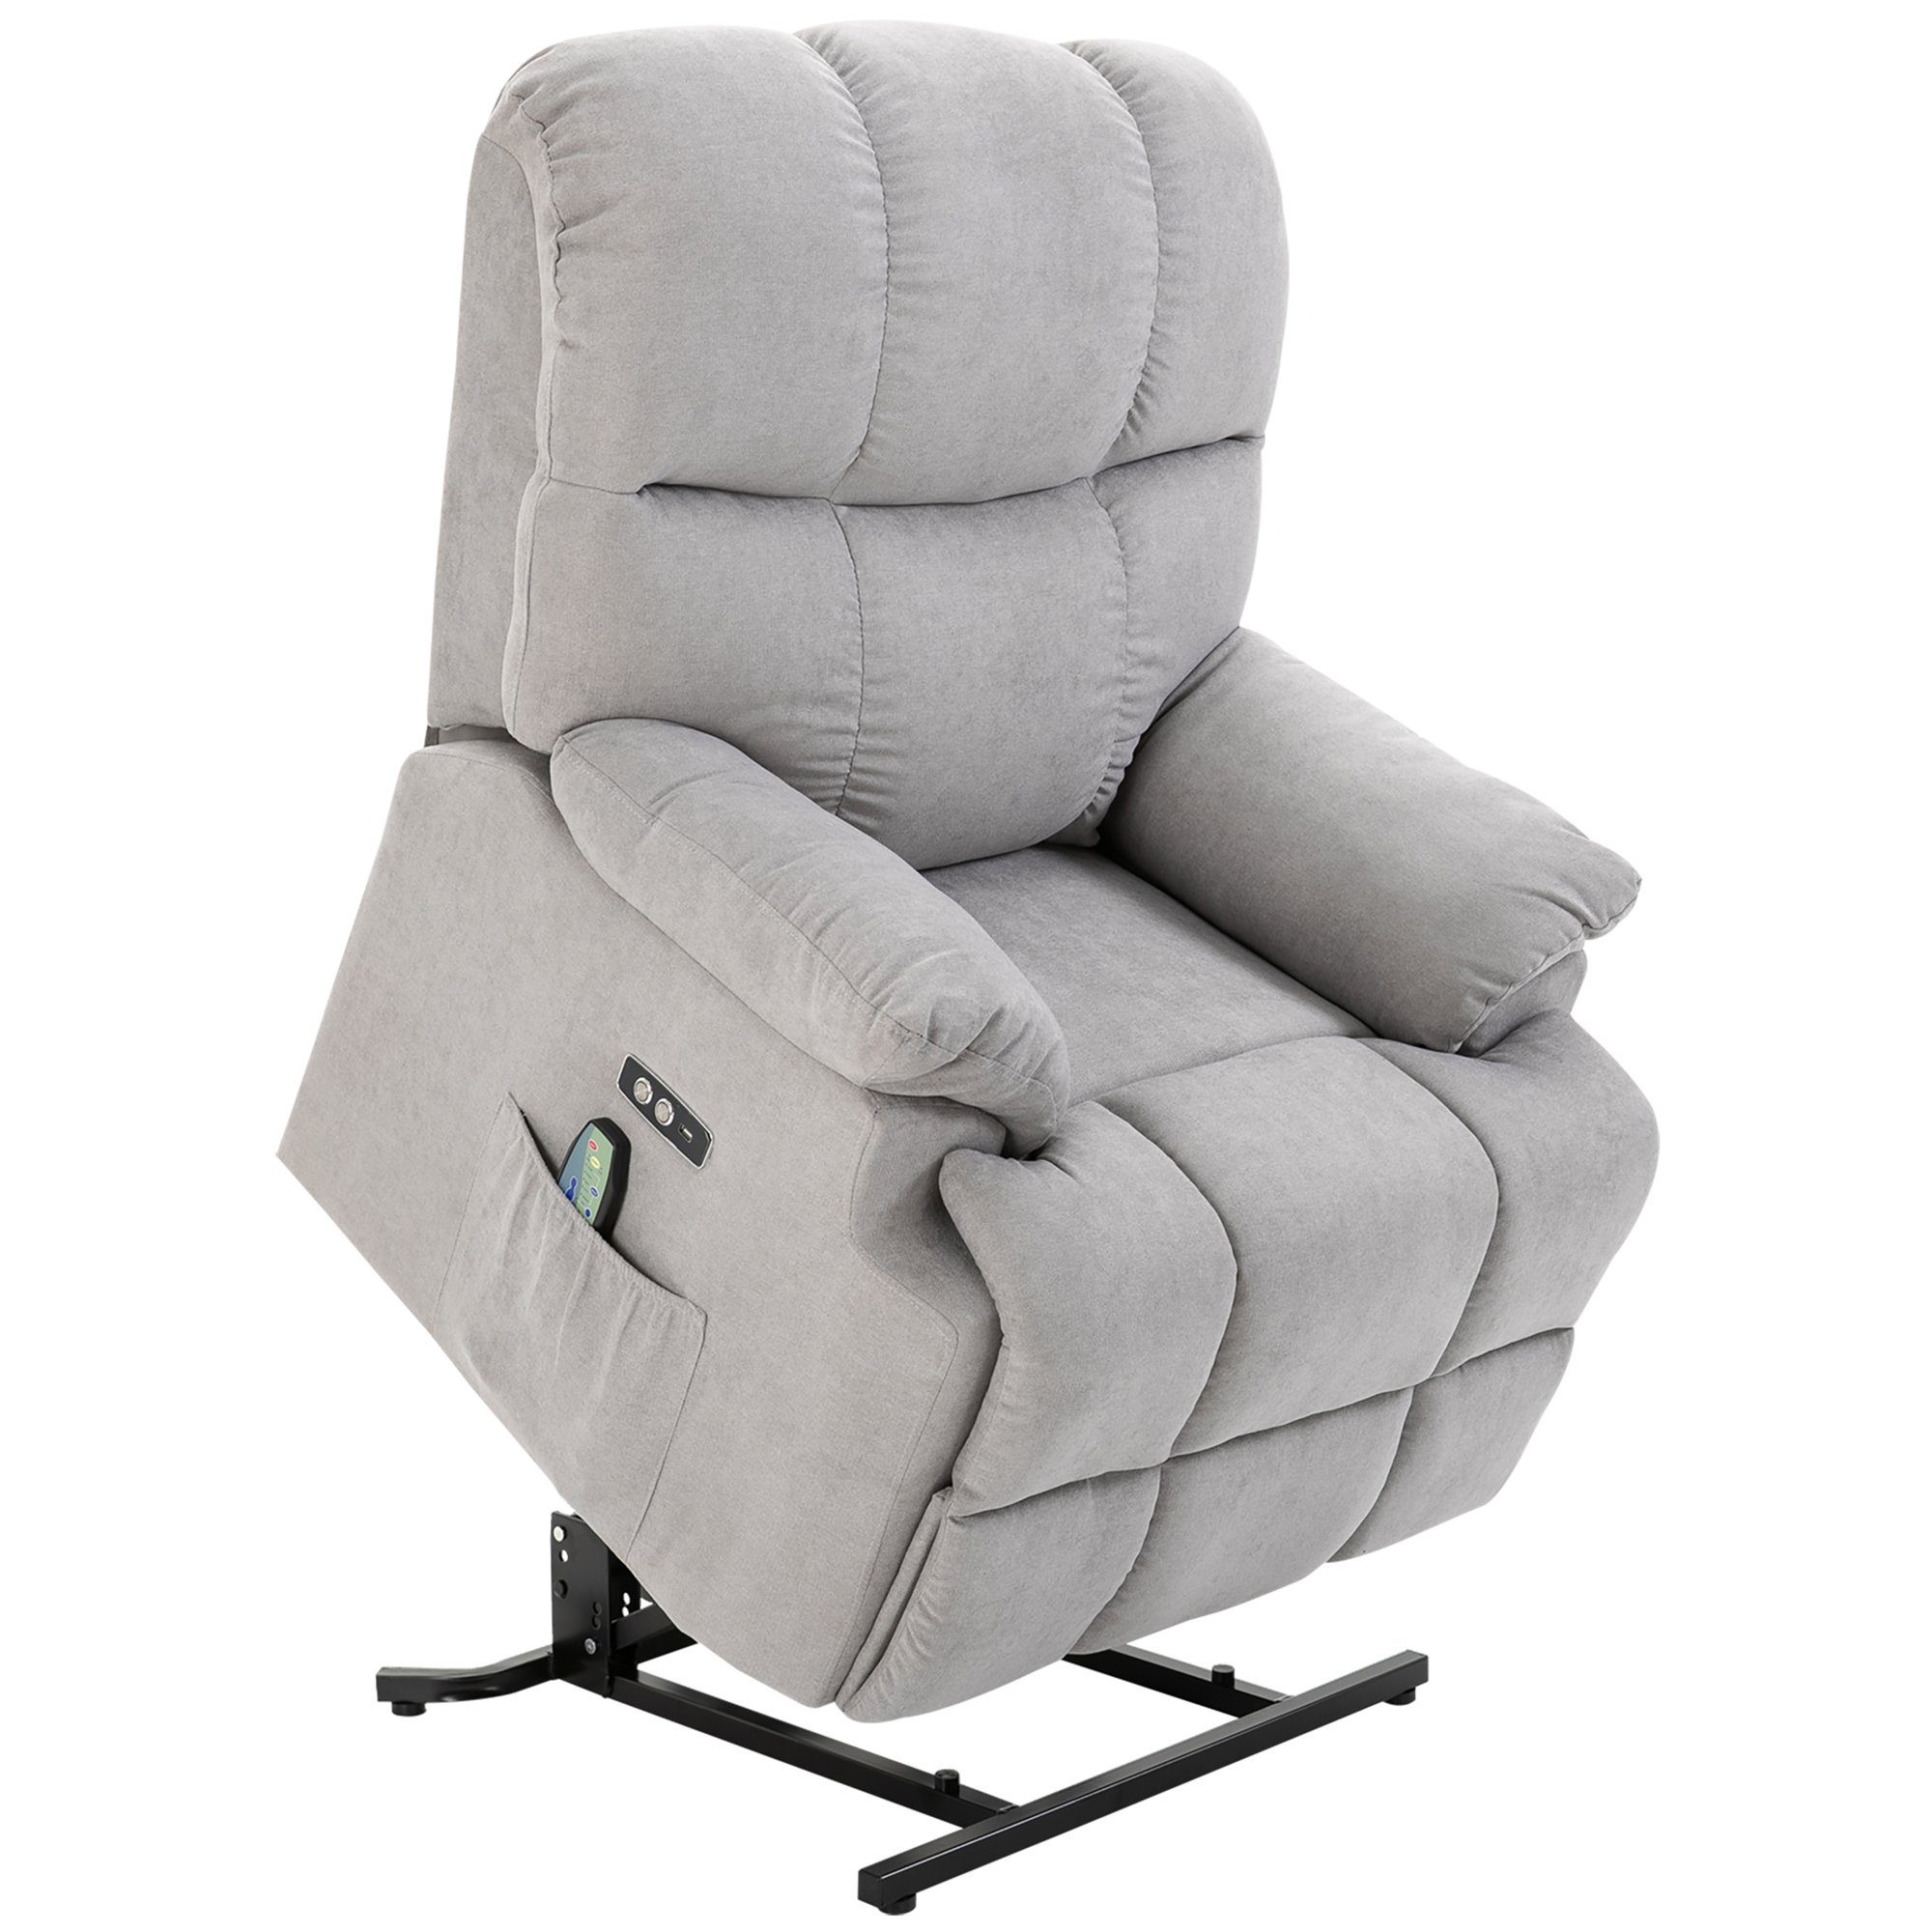 HOMCOM Massagesessel Sessel mit Aufstehhilfe, 8 Vibrationsköpfe (Relaxsessel, 1-St., Fernsehsessel), bis 150 kg belastbar